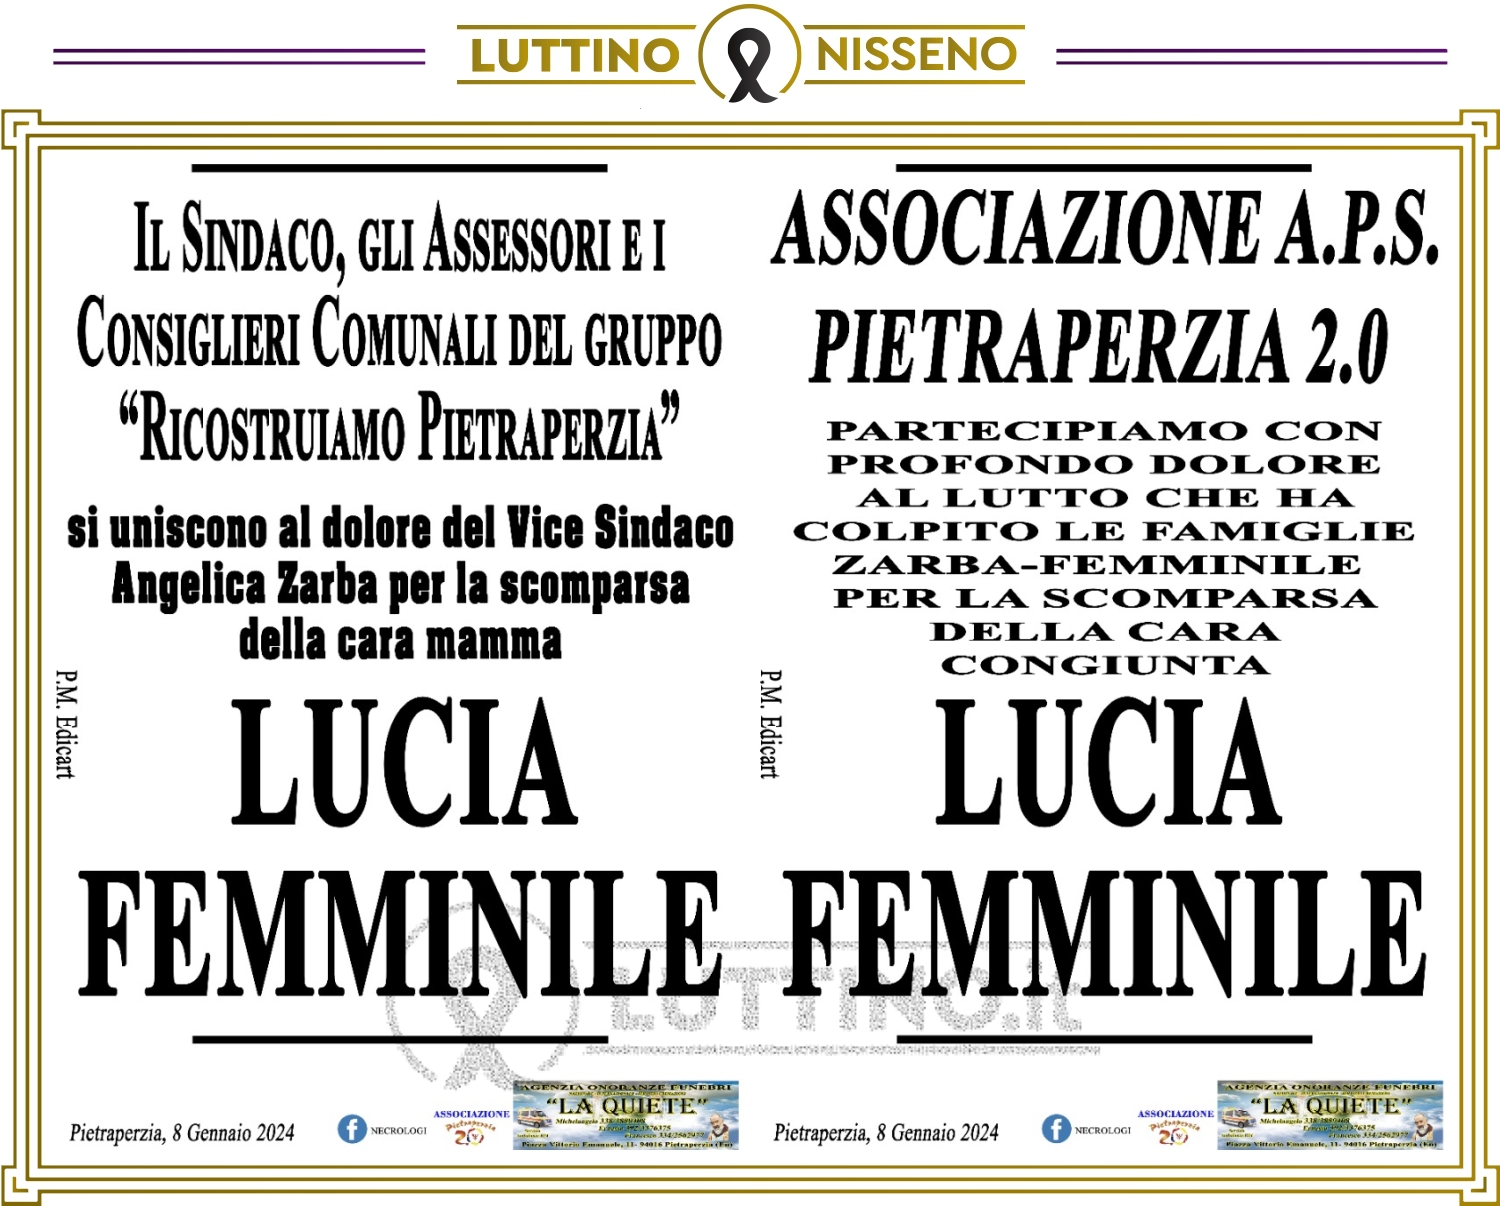 Lucia Femminile